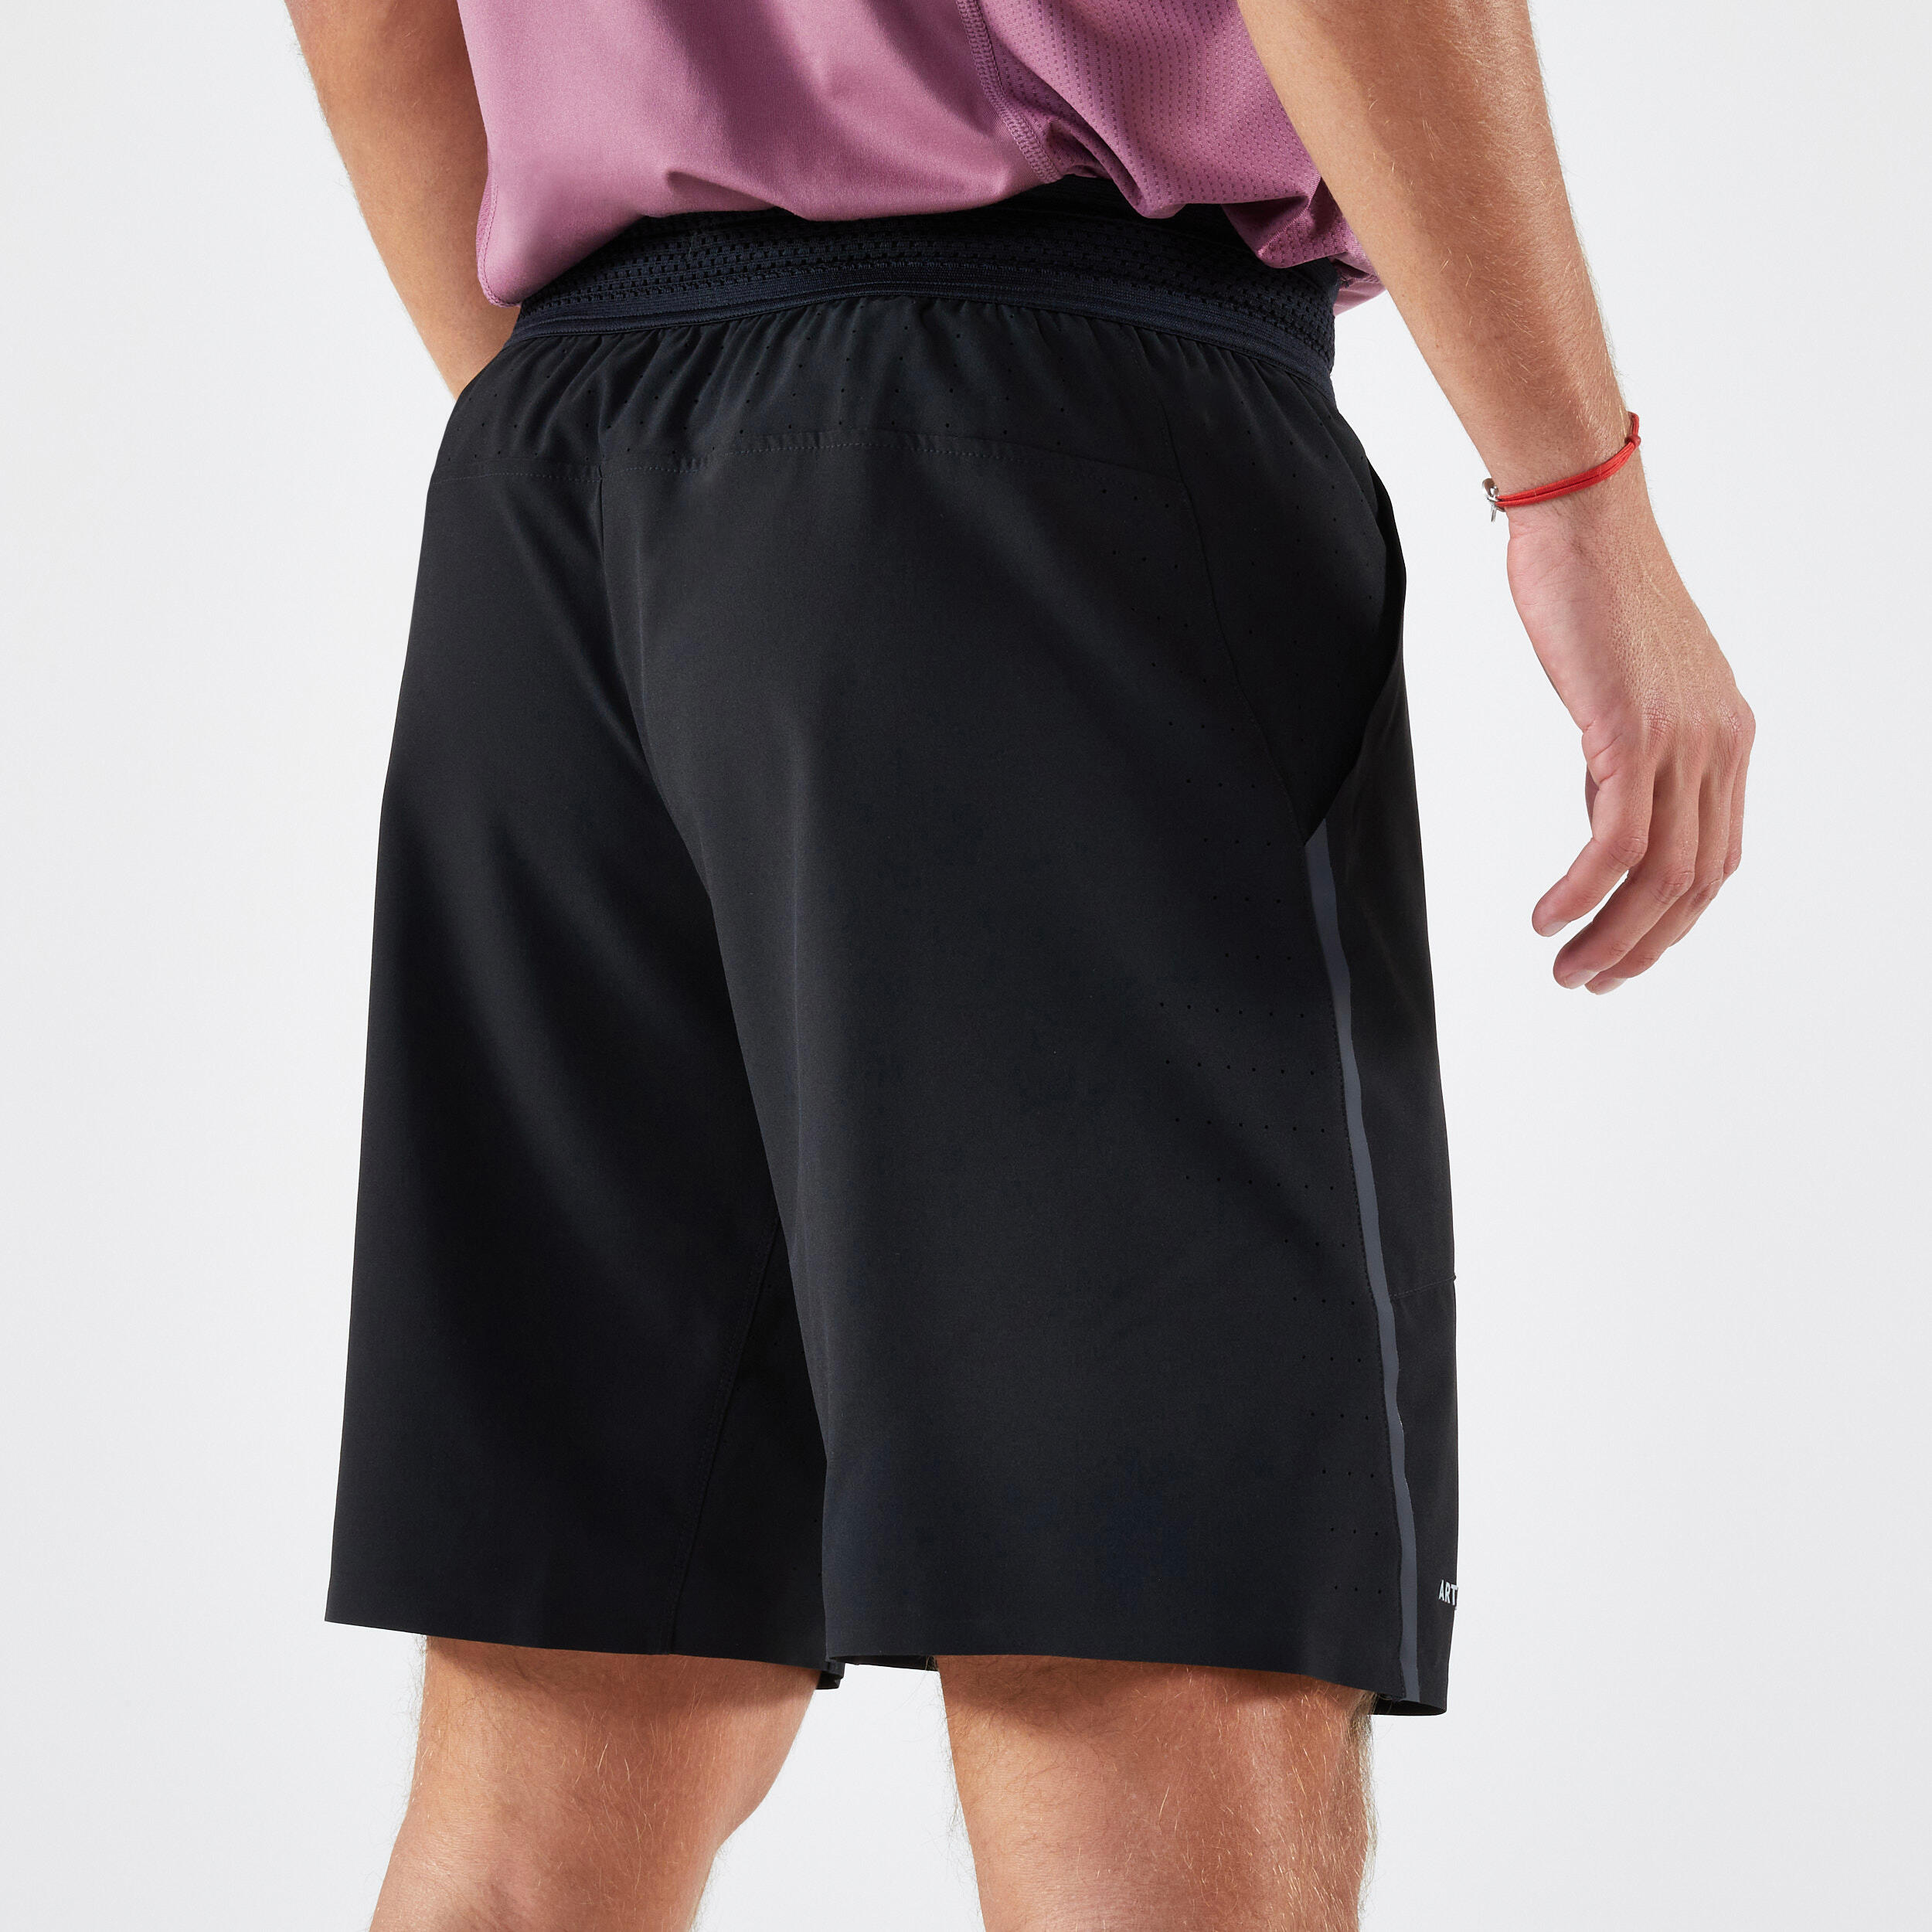 Men's Breathable Tennis Shorts Dry+ Gaël Monfils - Black 2/6